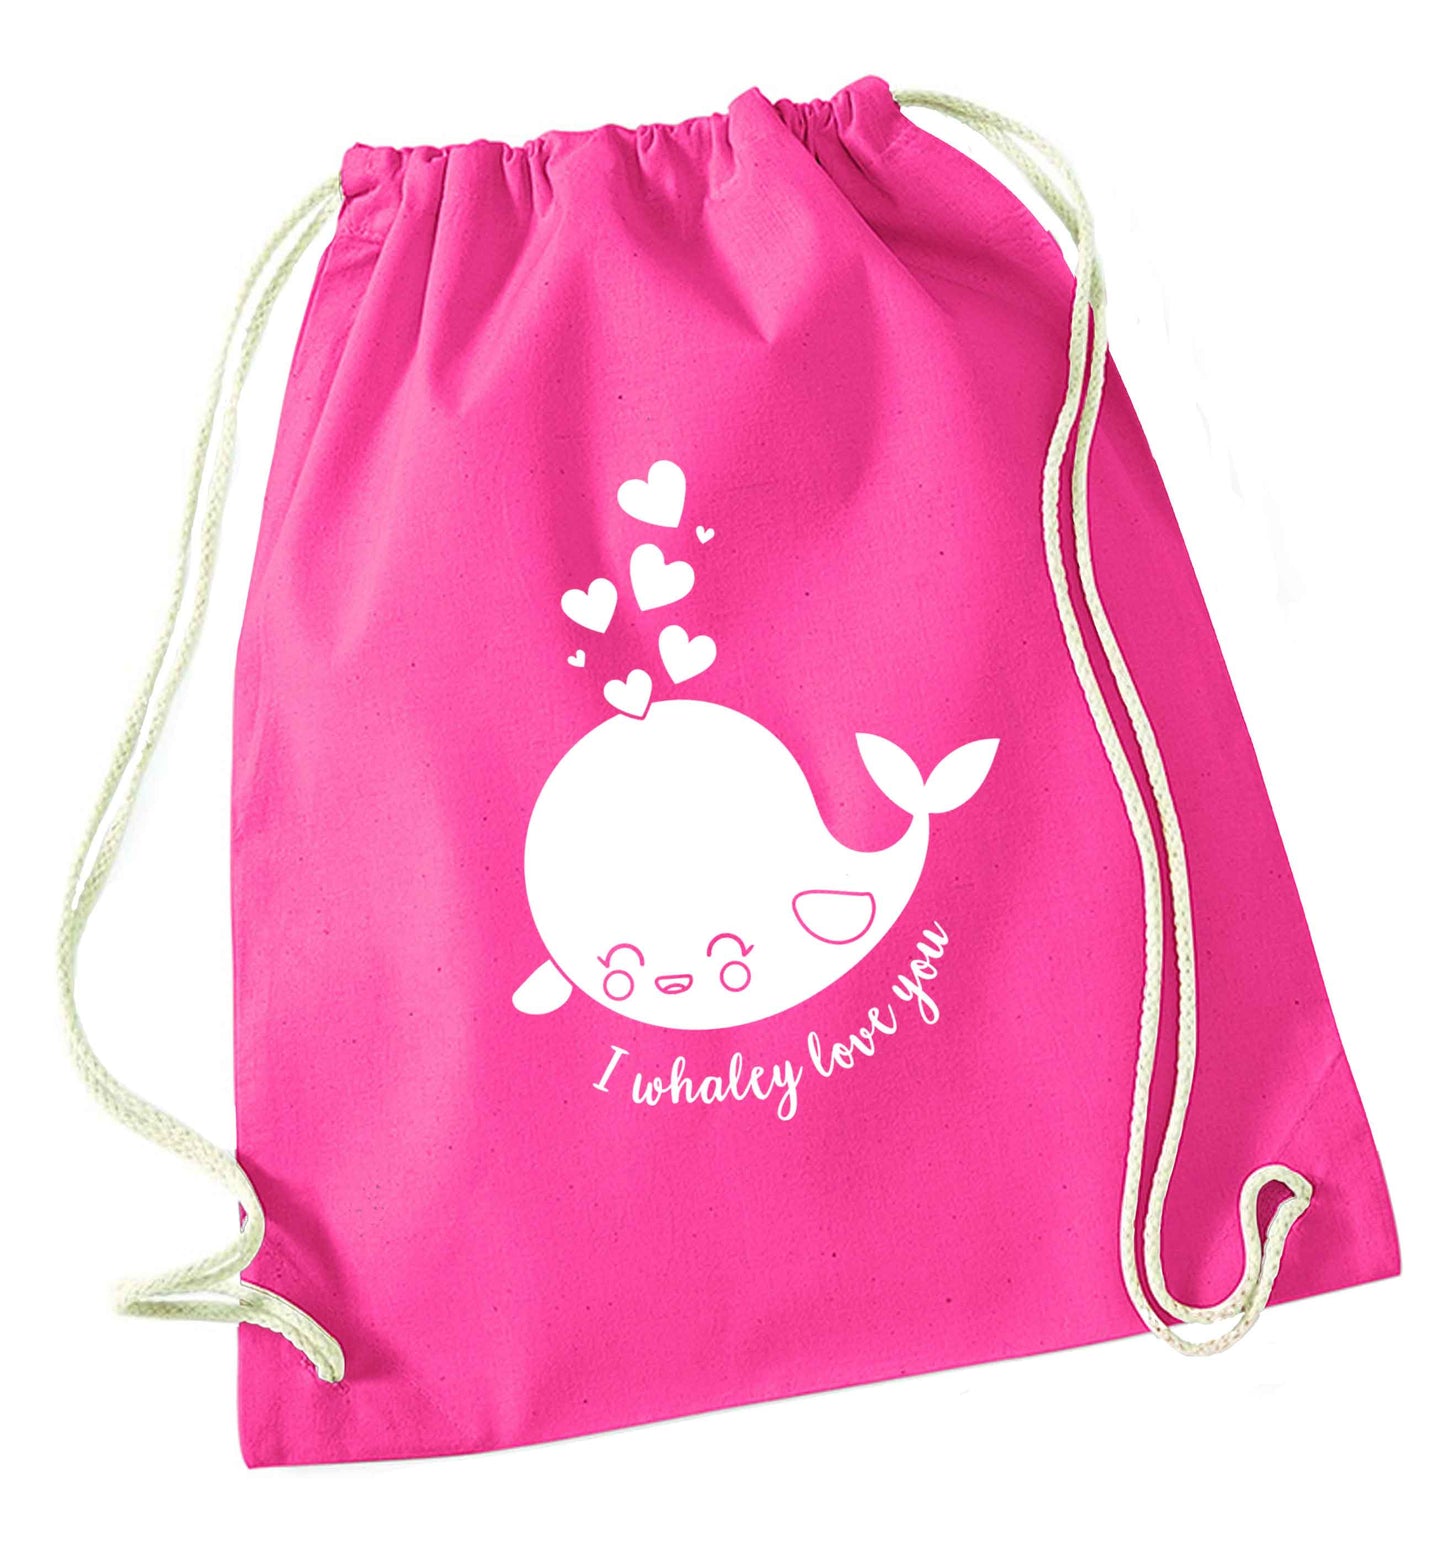 I whaley love you pink drawstring bag